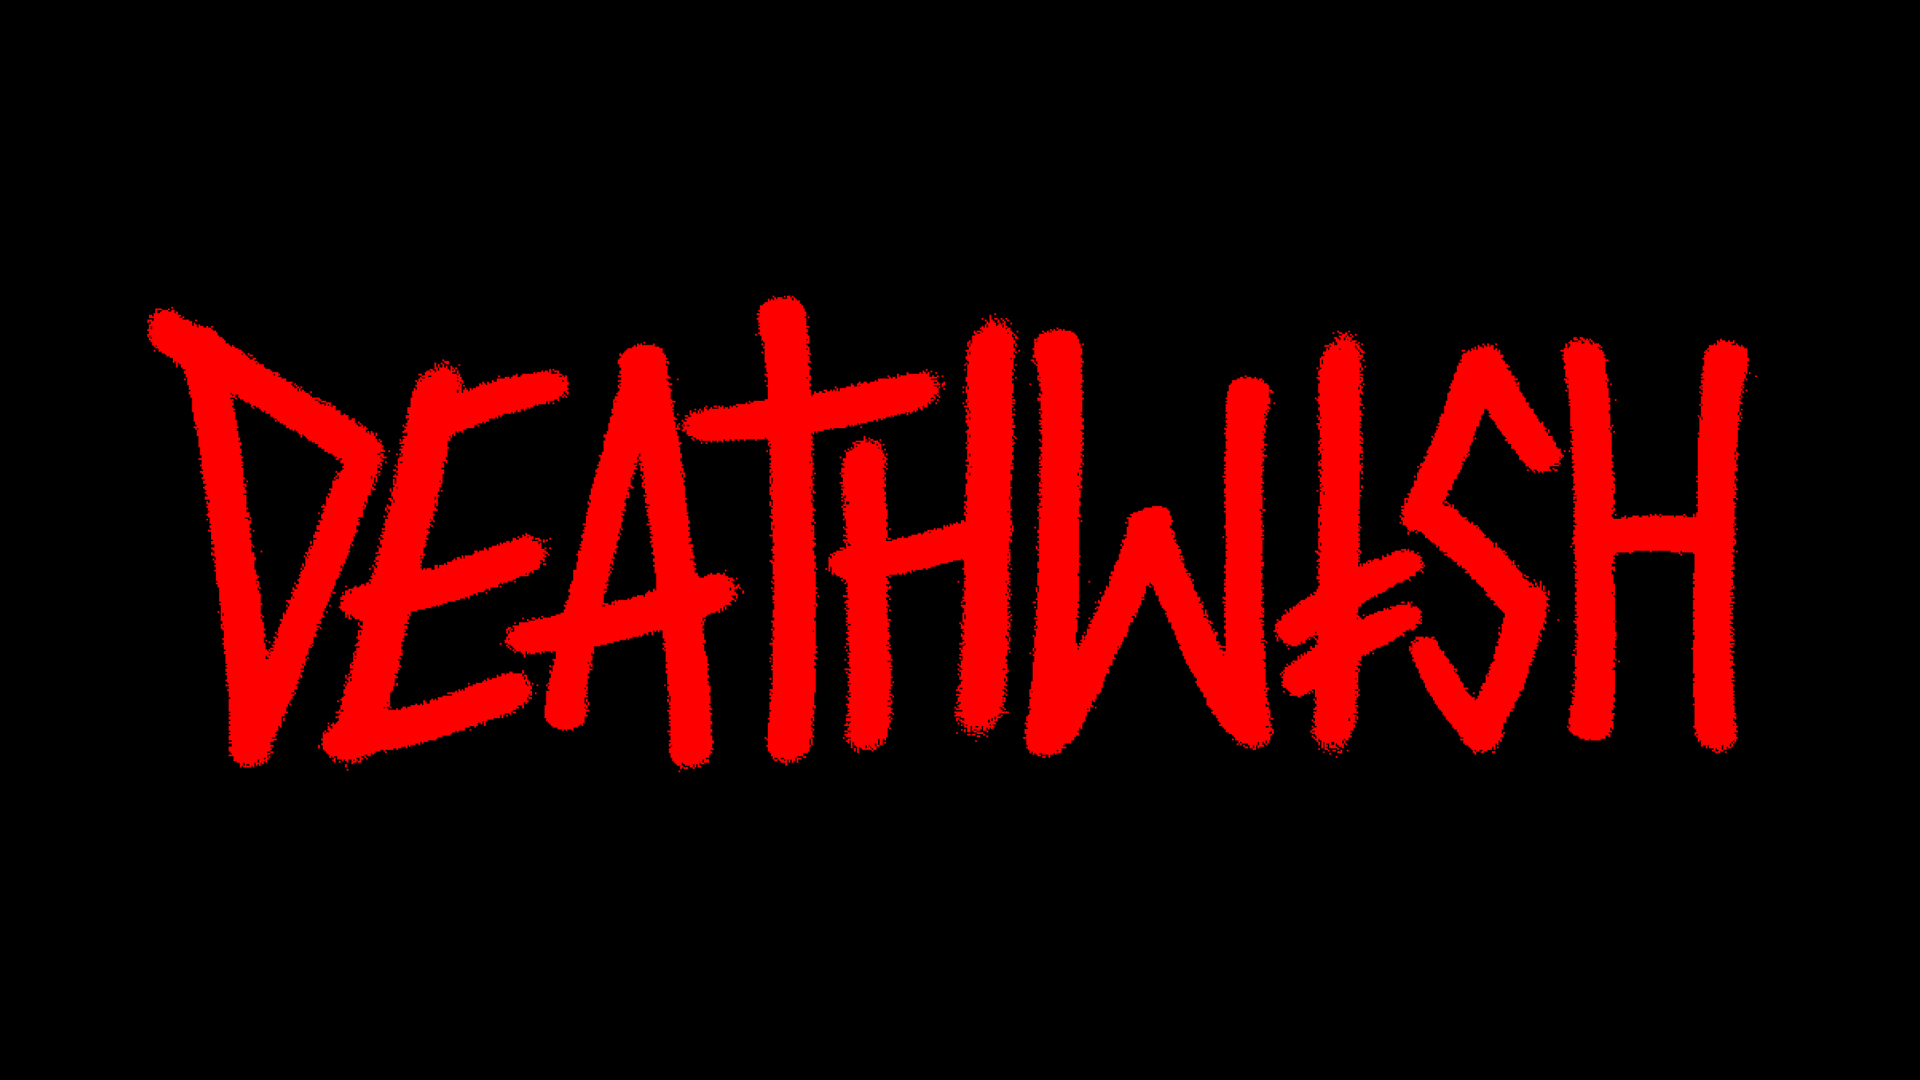 Death Wish Skateboards wallpaper   673425 1920x1080